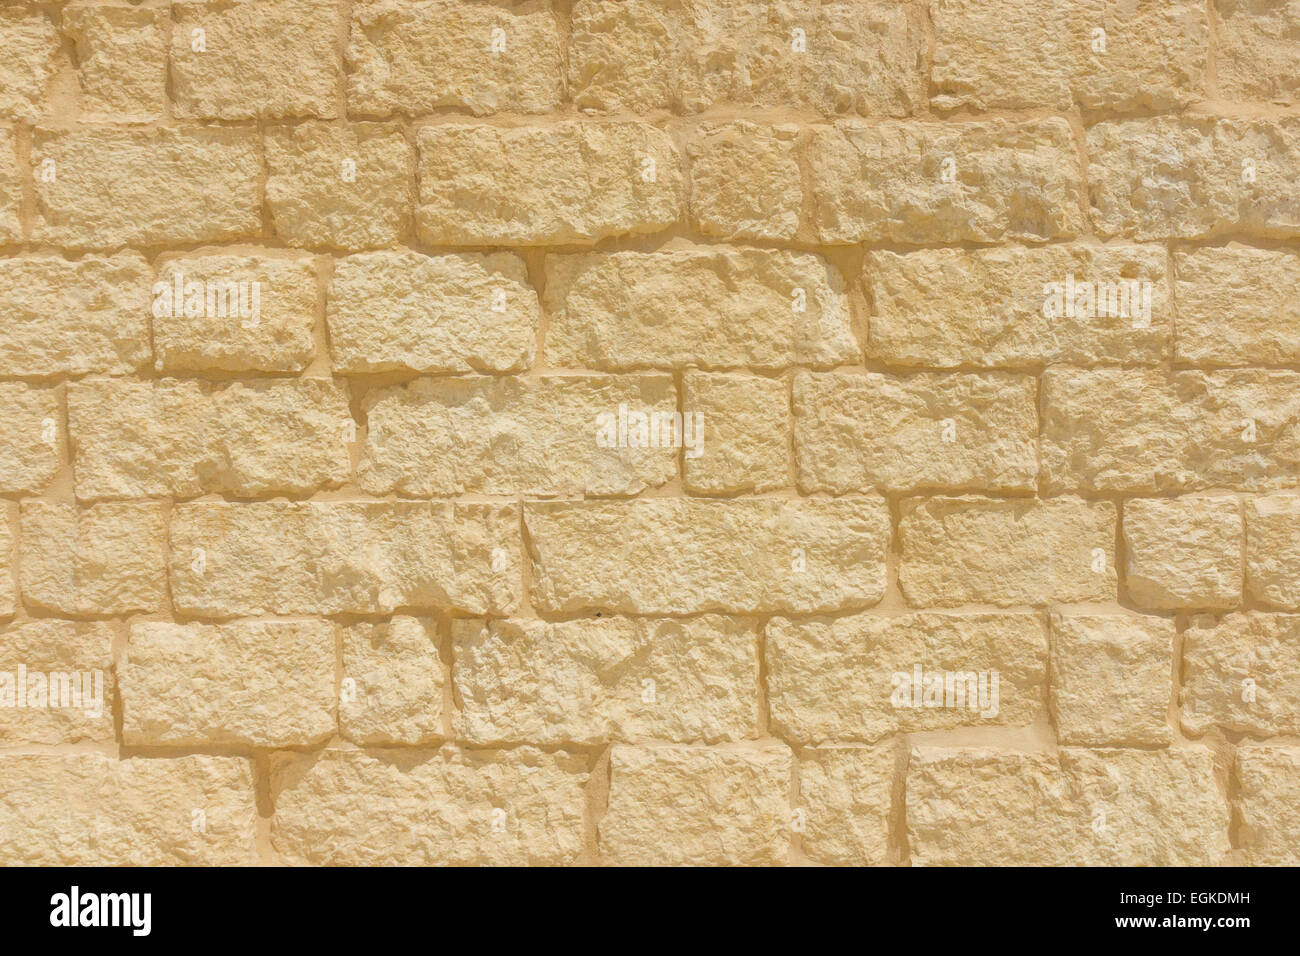 Sandstone brick wall background. Stock Photo